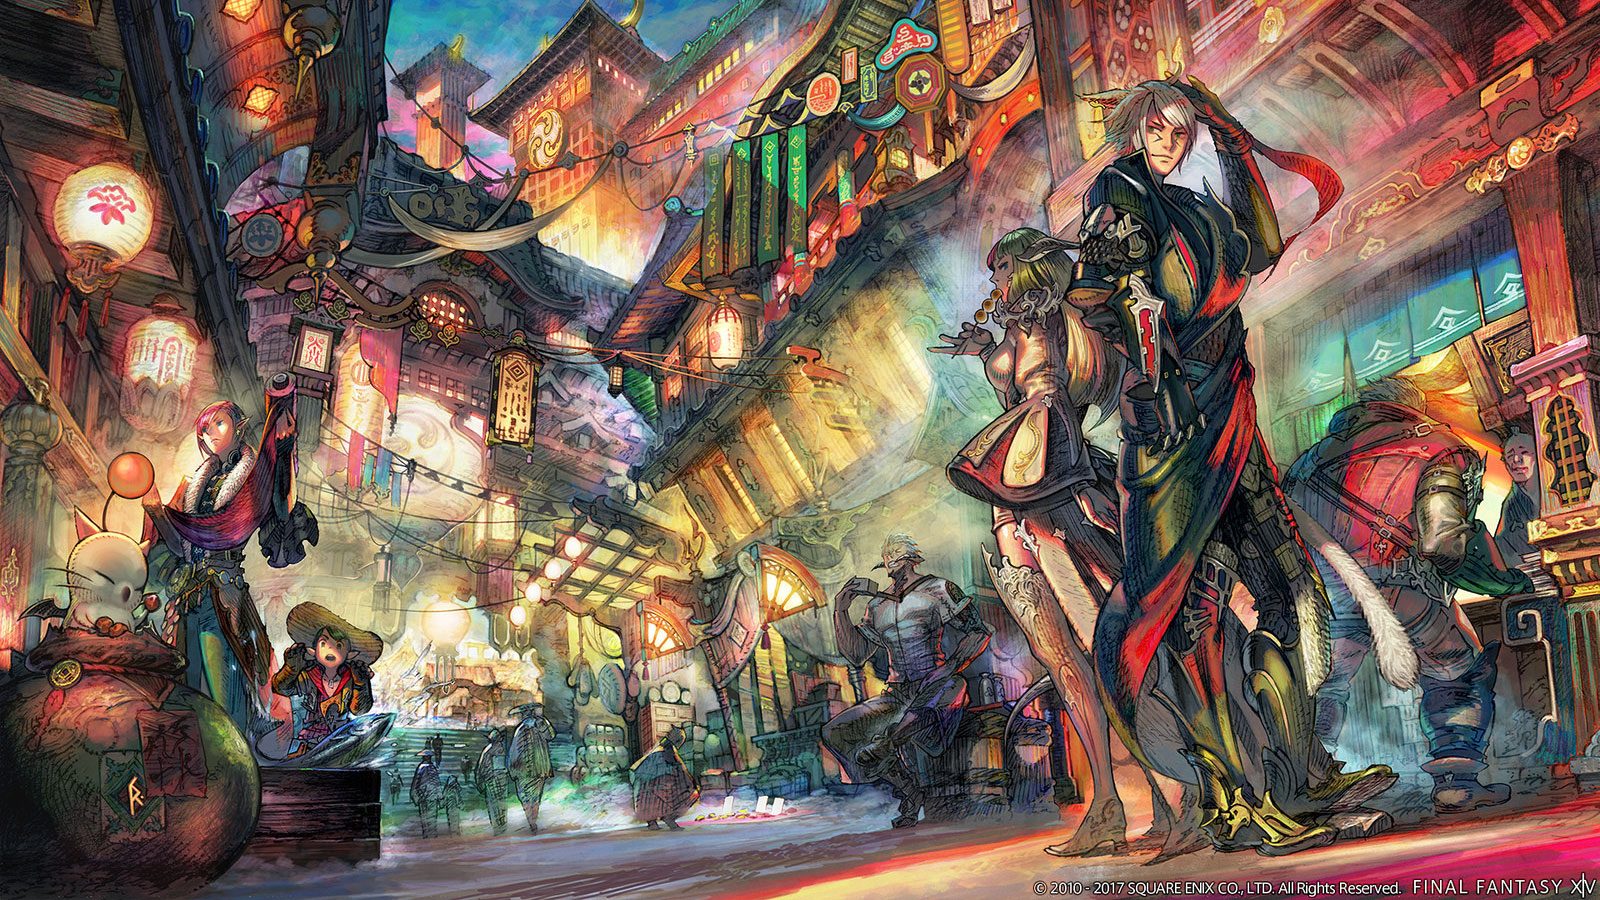 Final Fantasy Xiv Stormblood Is A New Beginning Playstation Blog